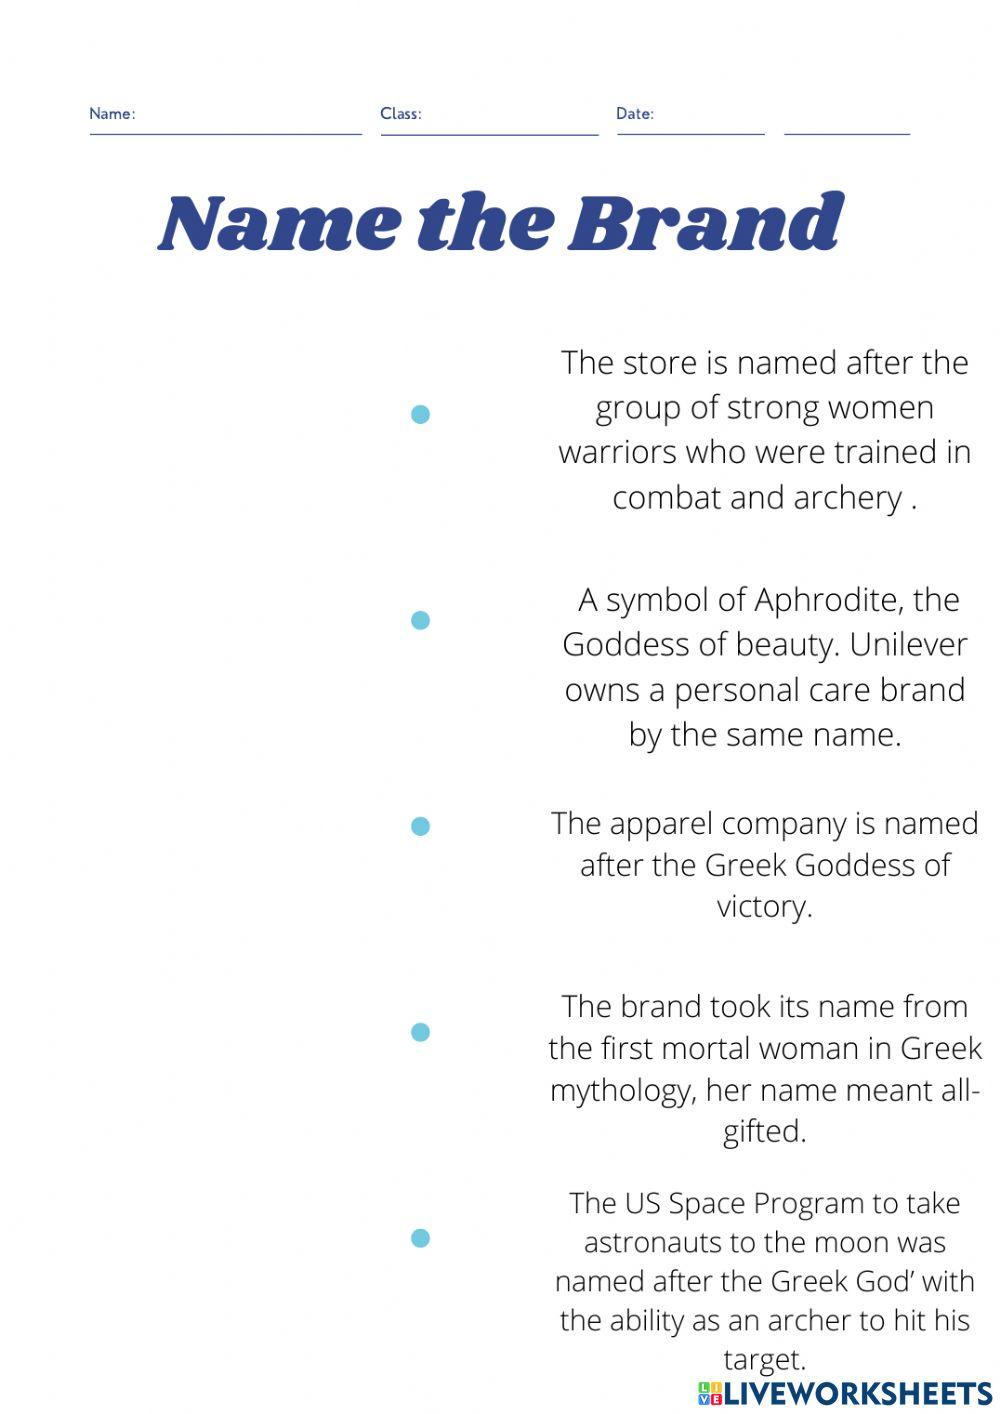 The Greek Mythology behind the Brand